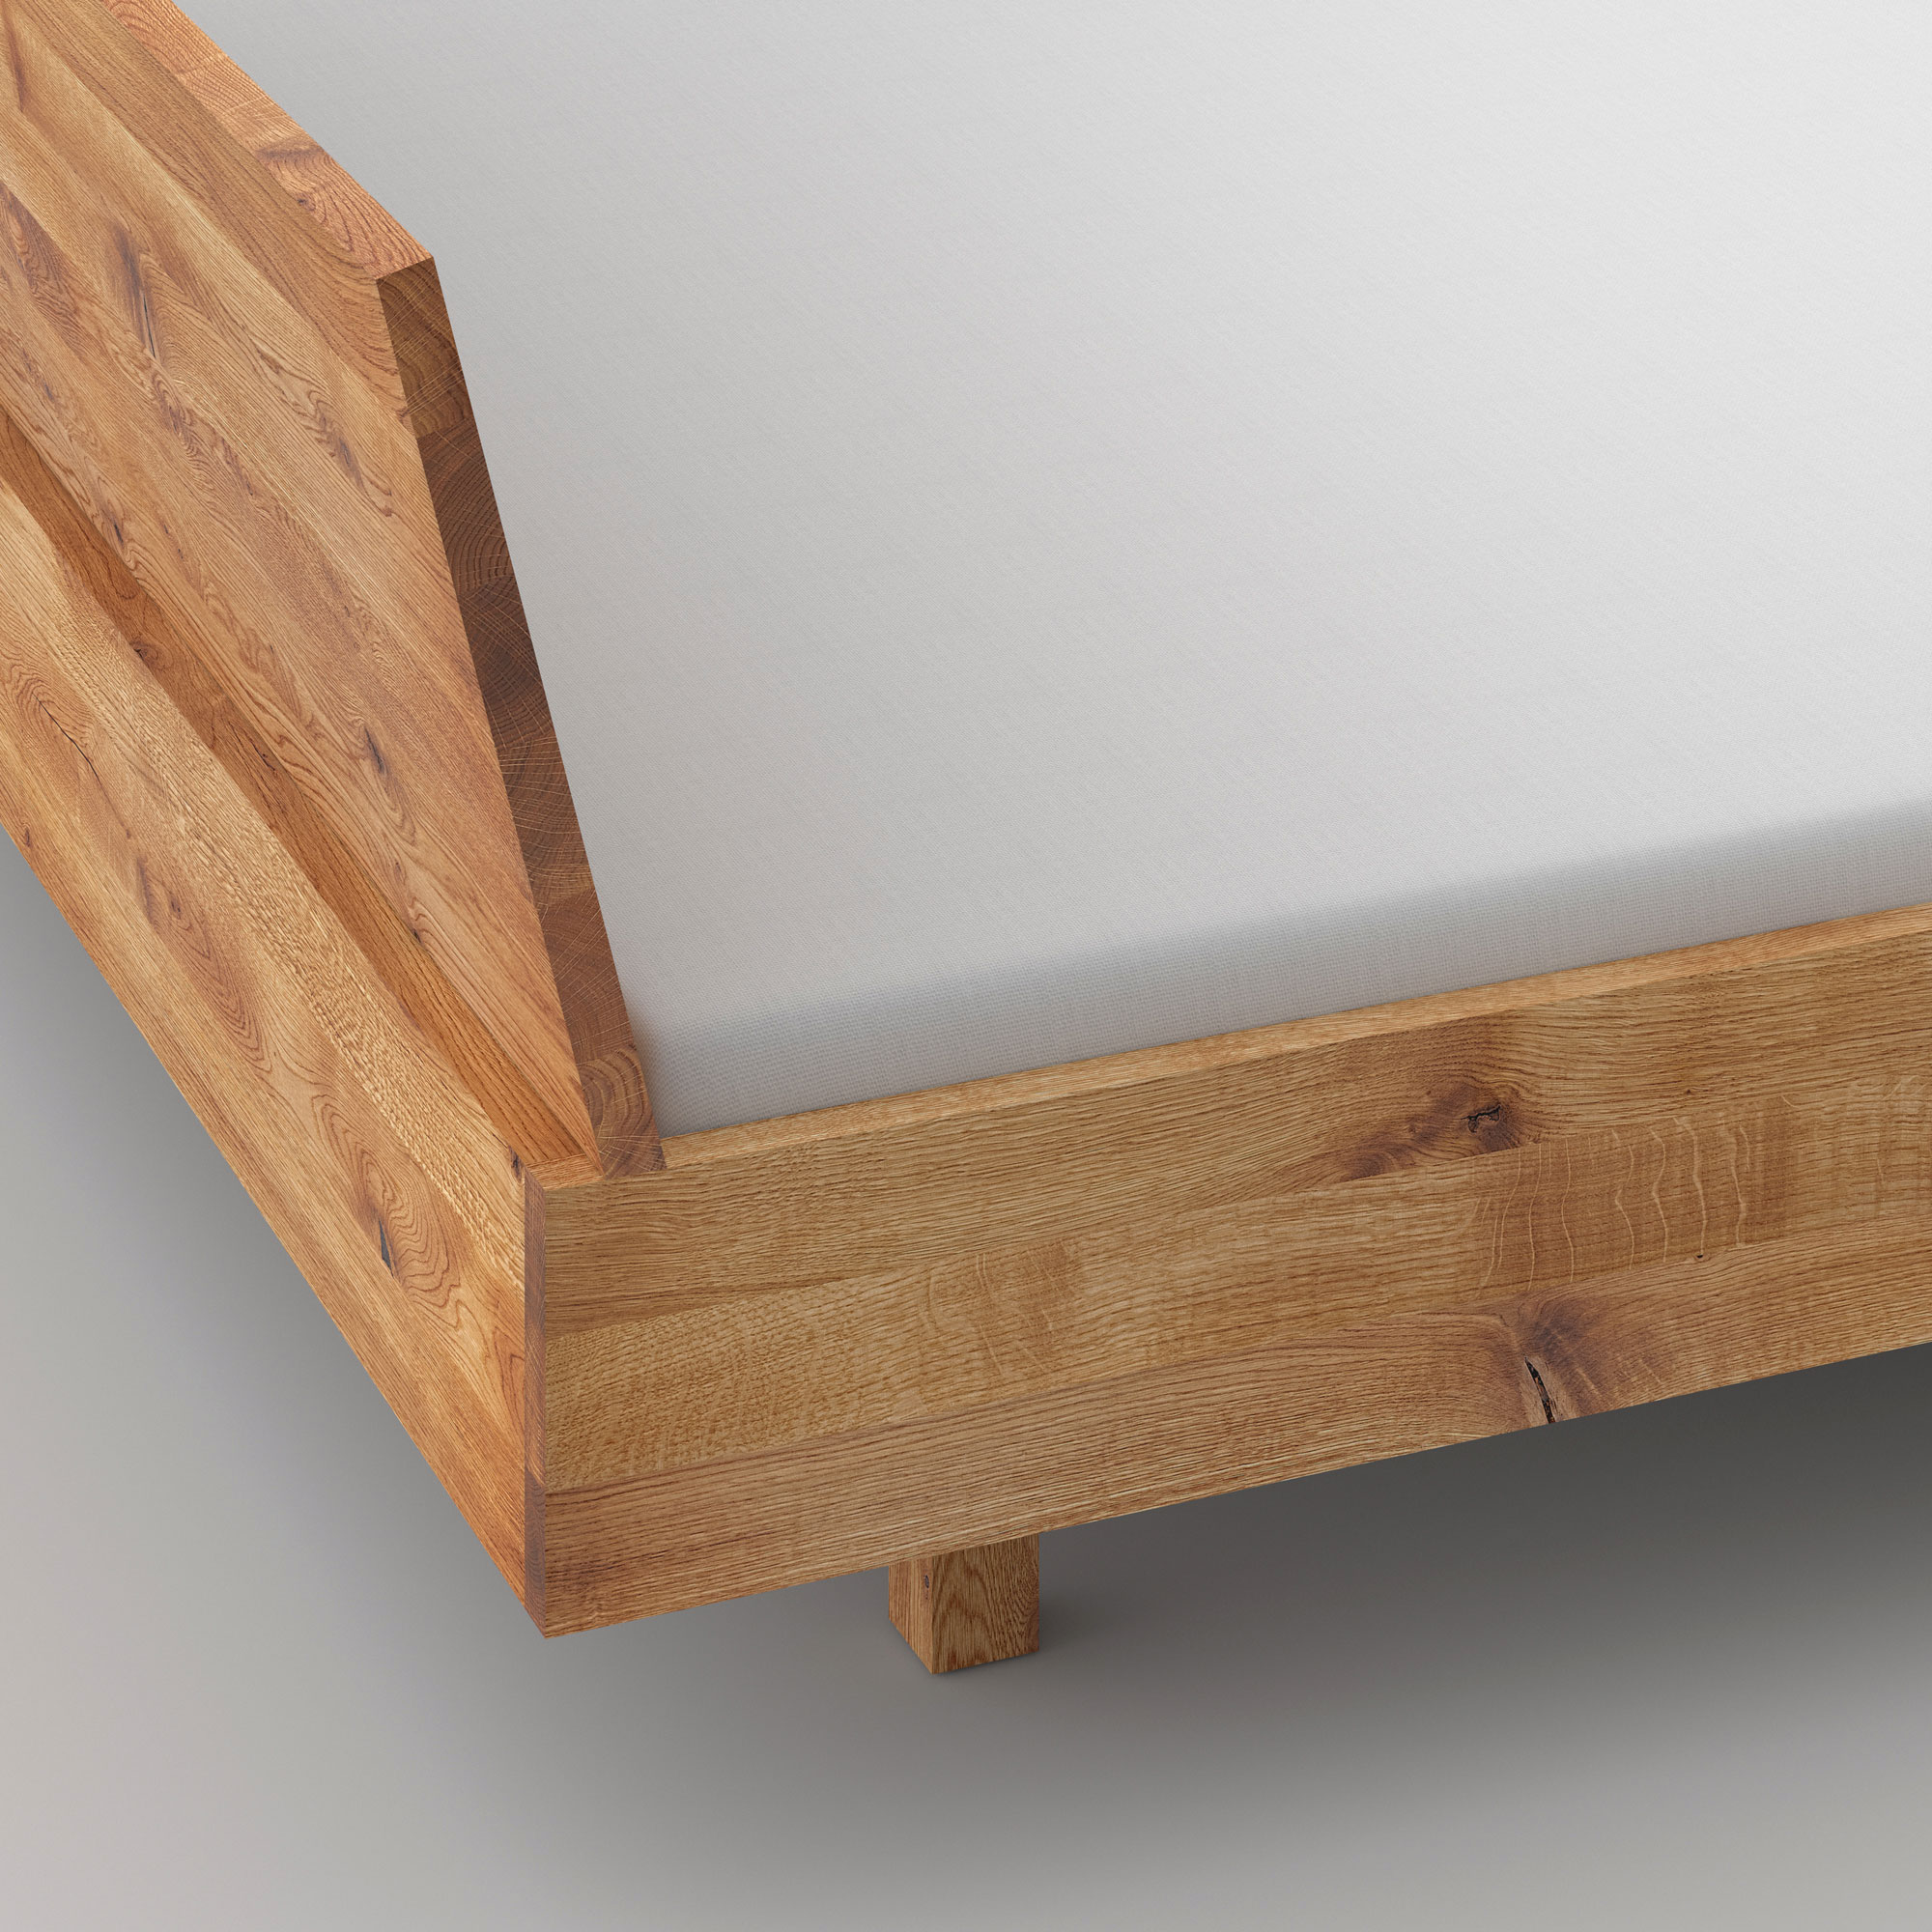 Design Bed QUADRA cam4 custom made in solid wood by vitamin design